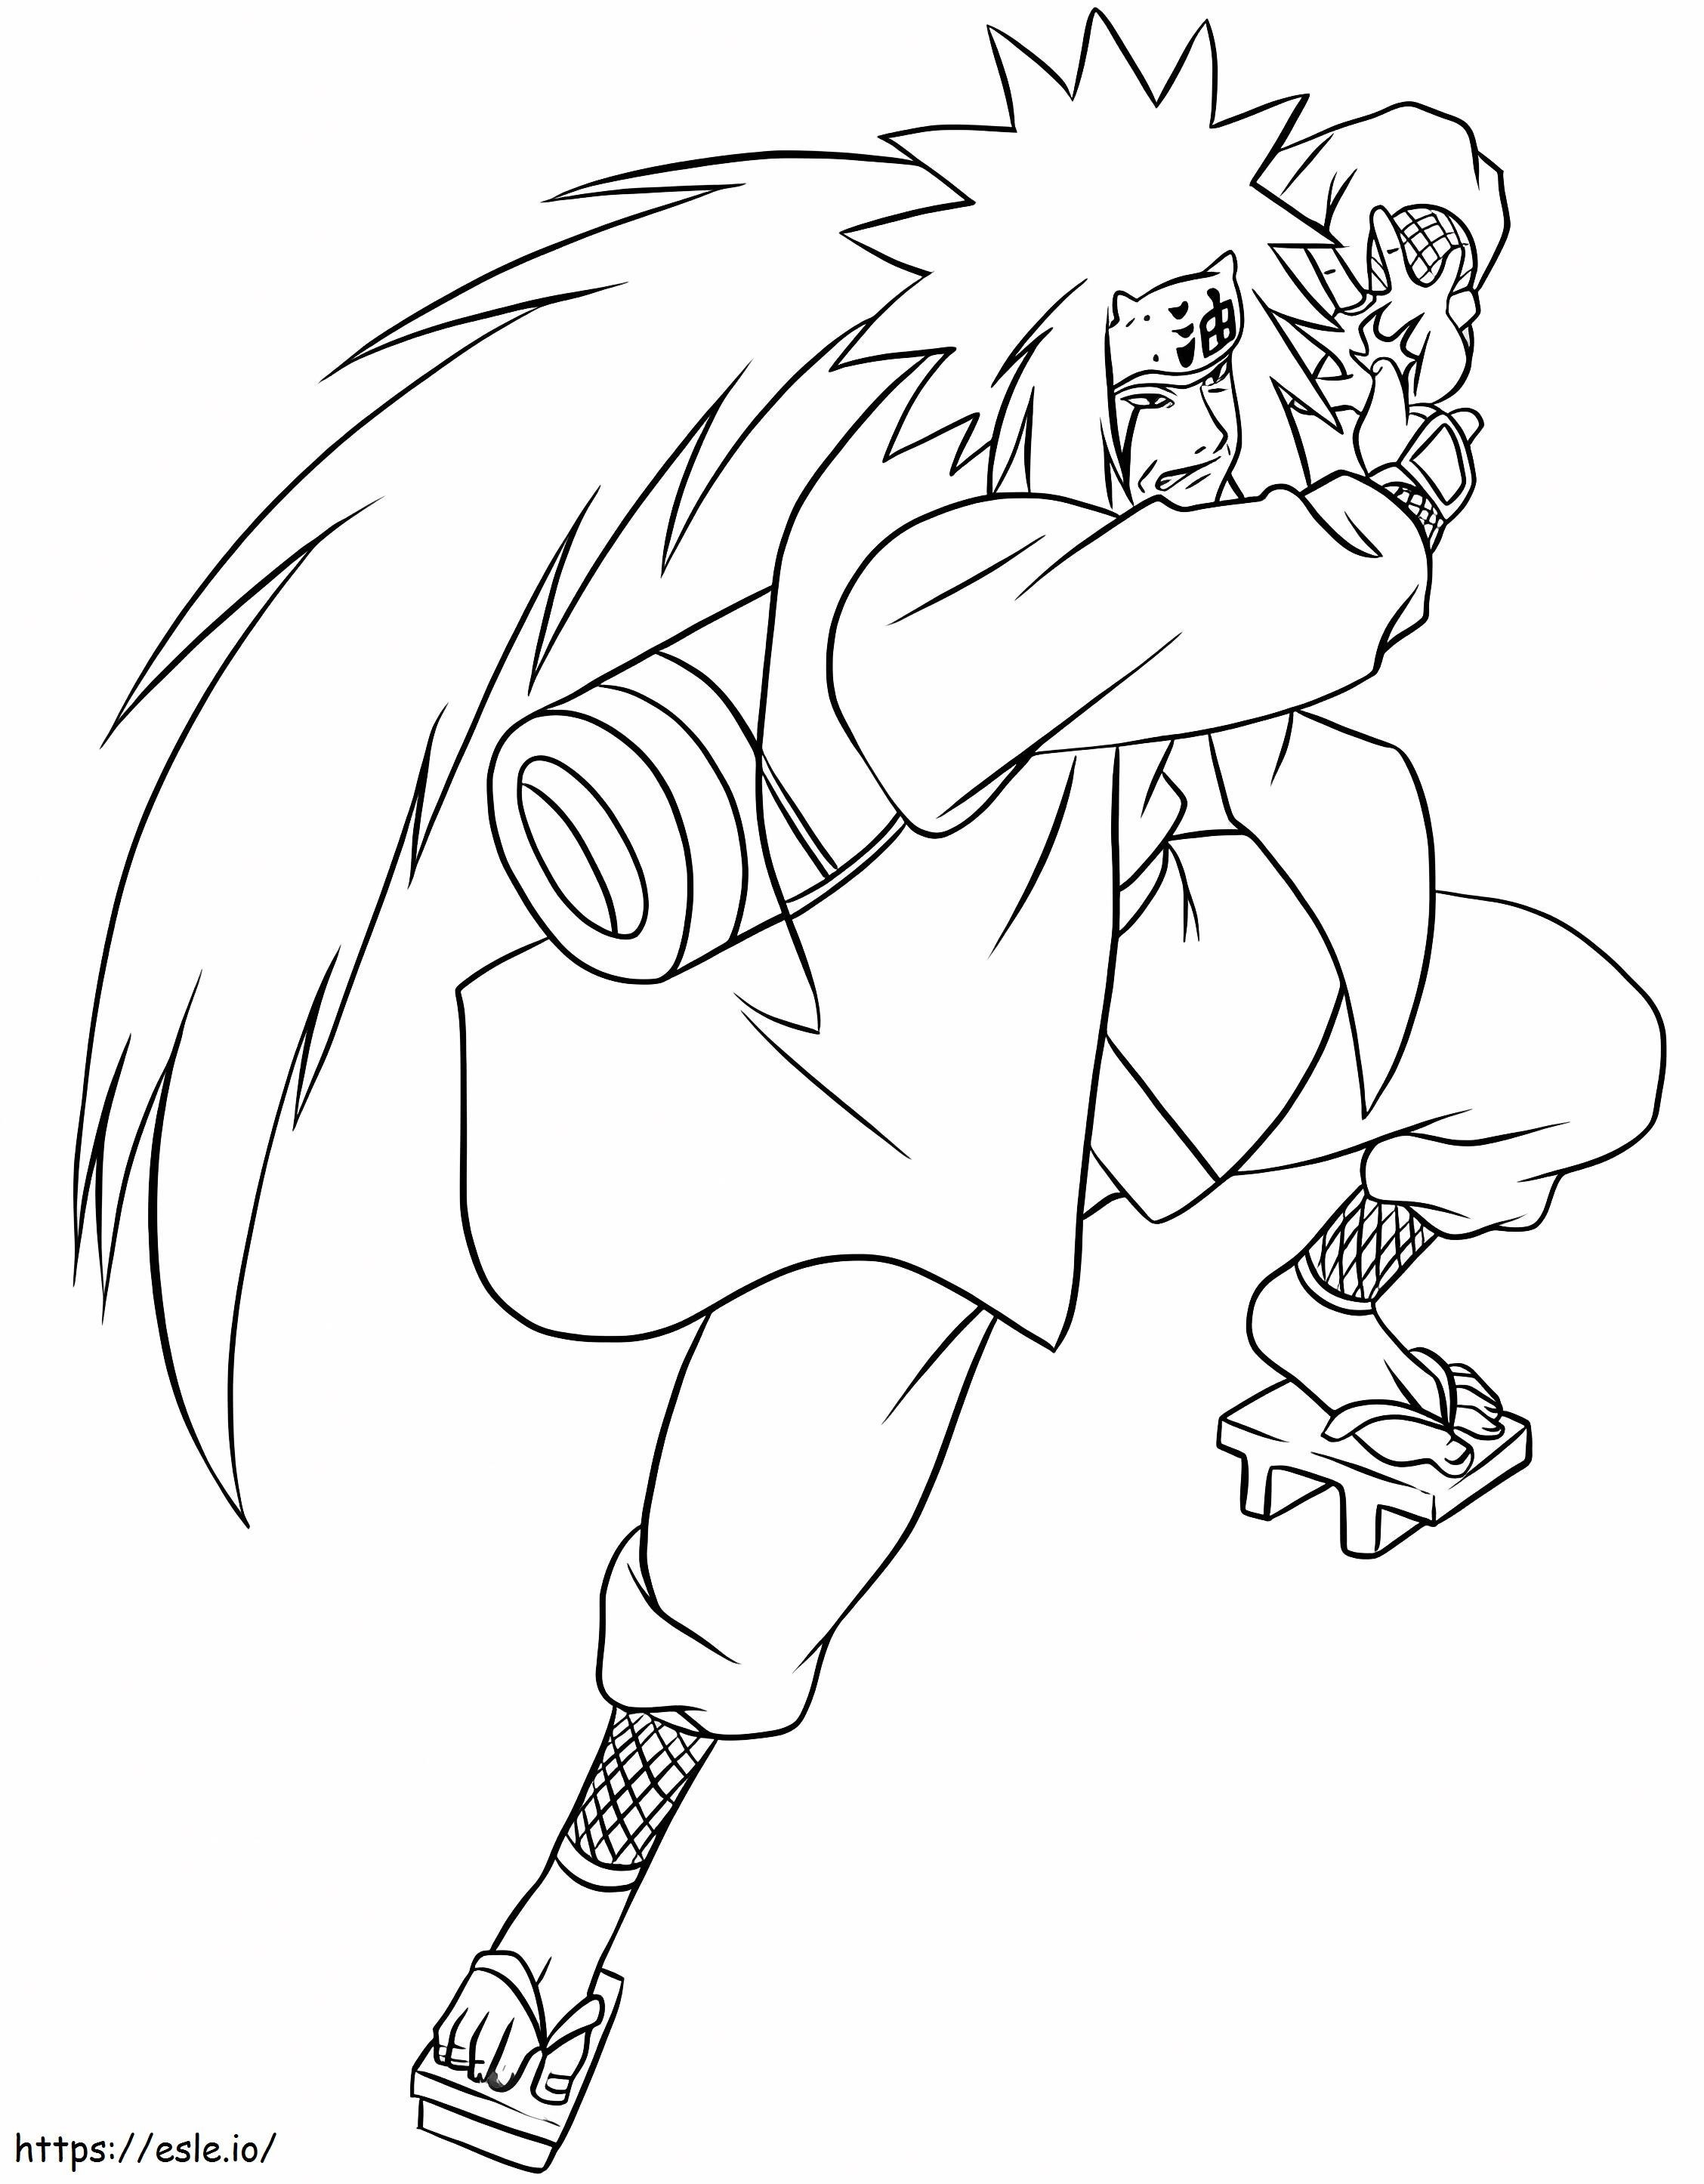 Cool Jiraiya Fighting coloring page